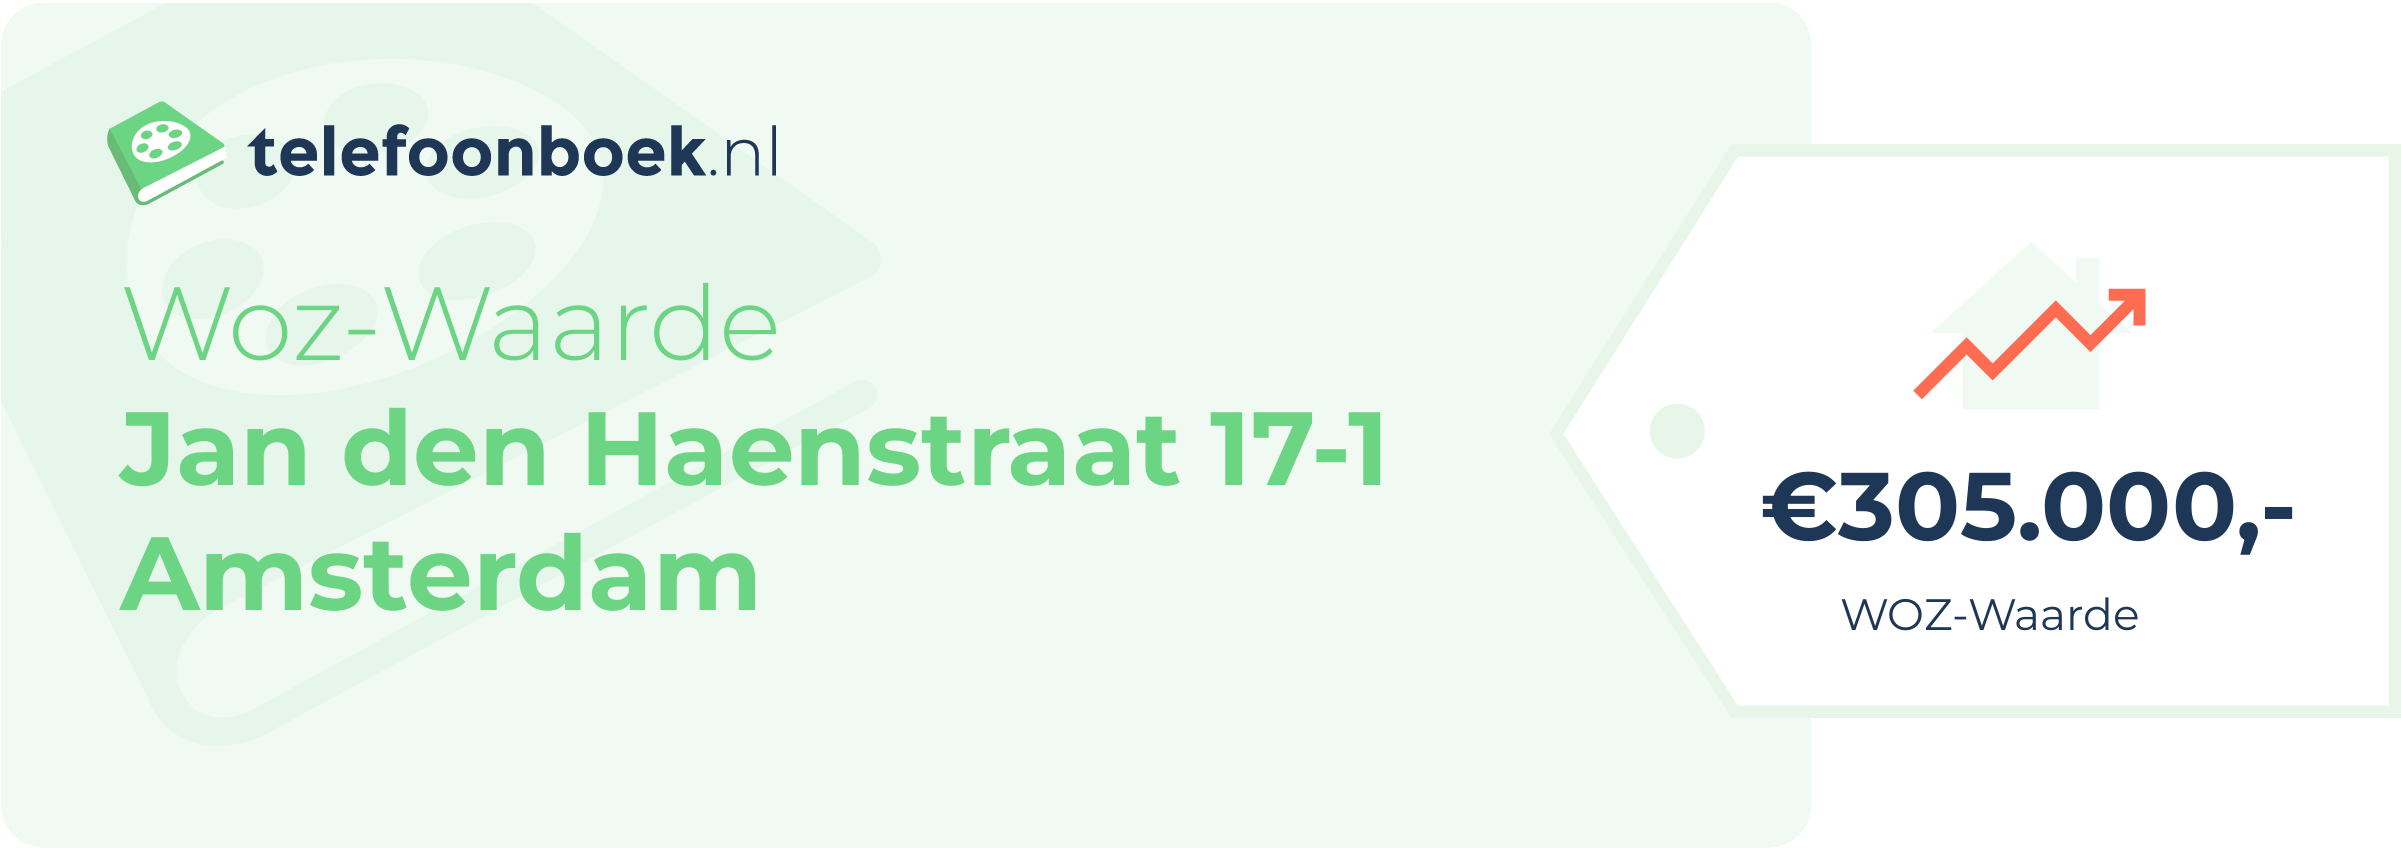 WOZ-waarde Jan Den Haenstraat 17-1 Amsterdam